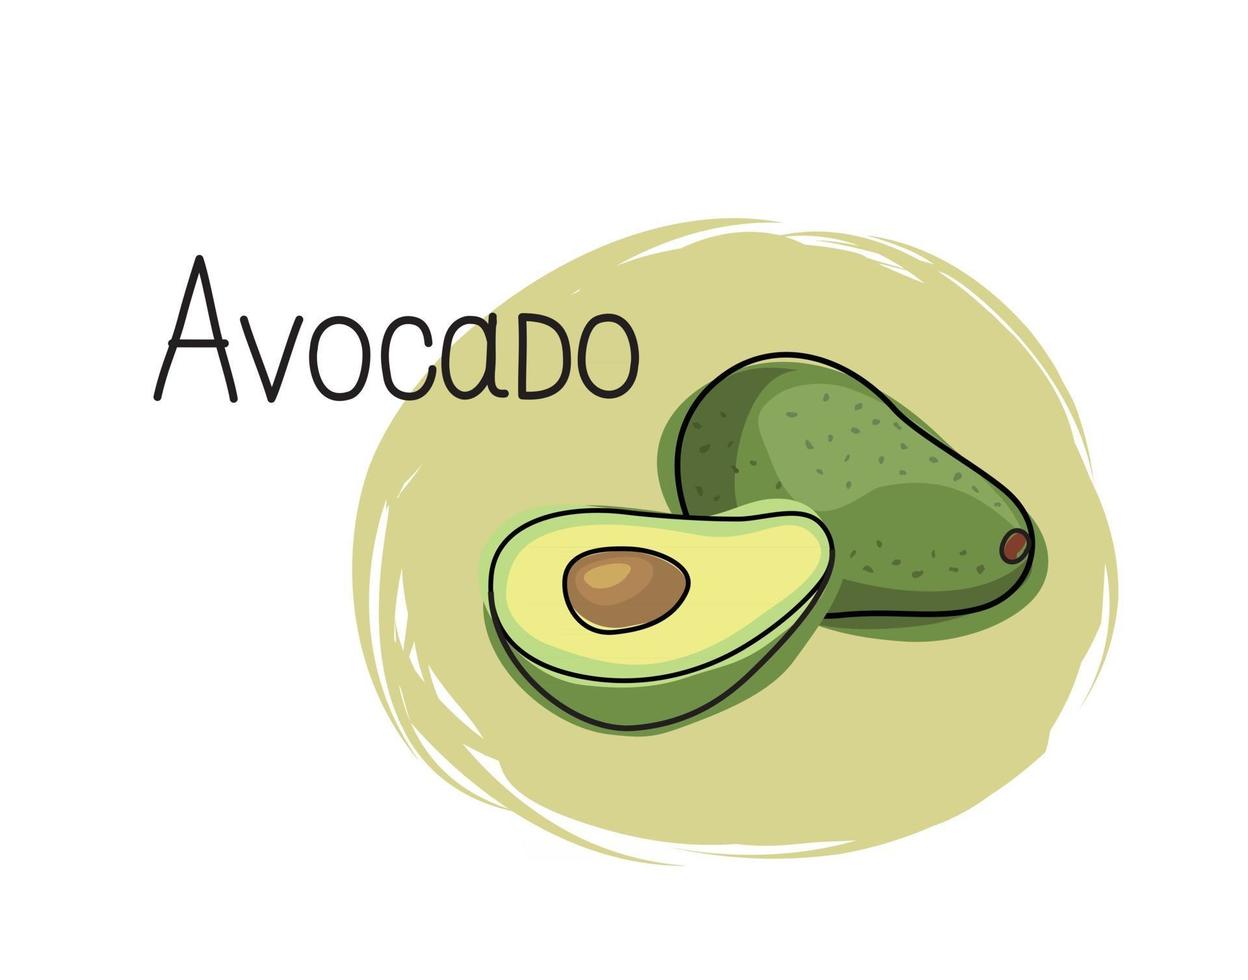 Avocado icon. Half and full fruit avocado isolated on white background with lettering Avocado. Vegetable stylish drawn symbol avocado vector